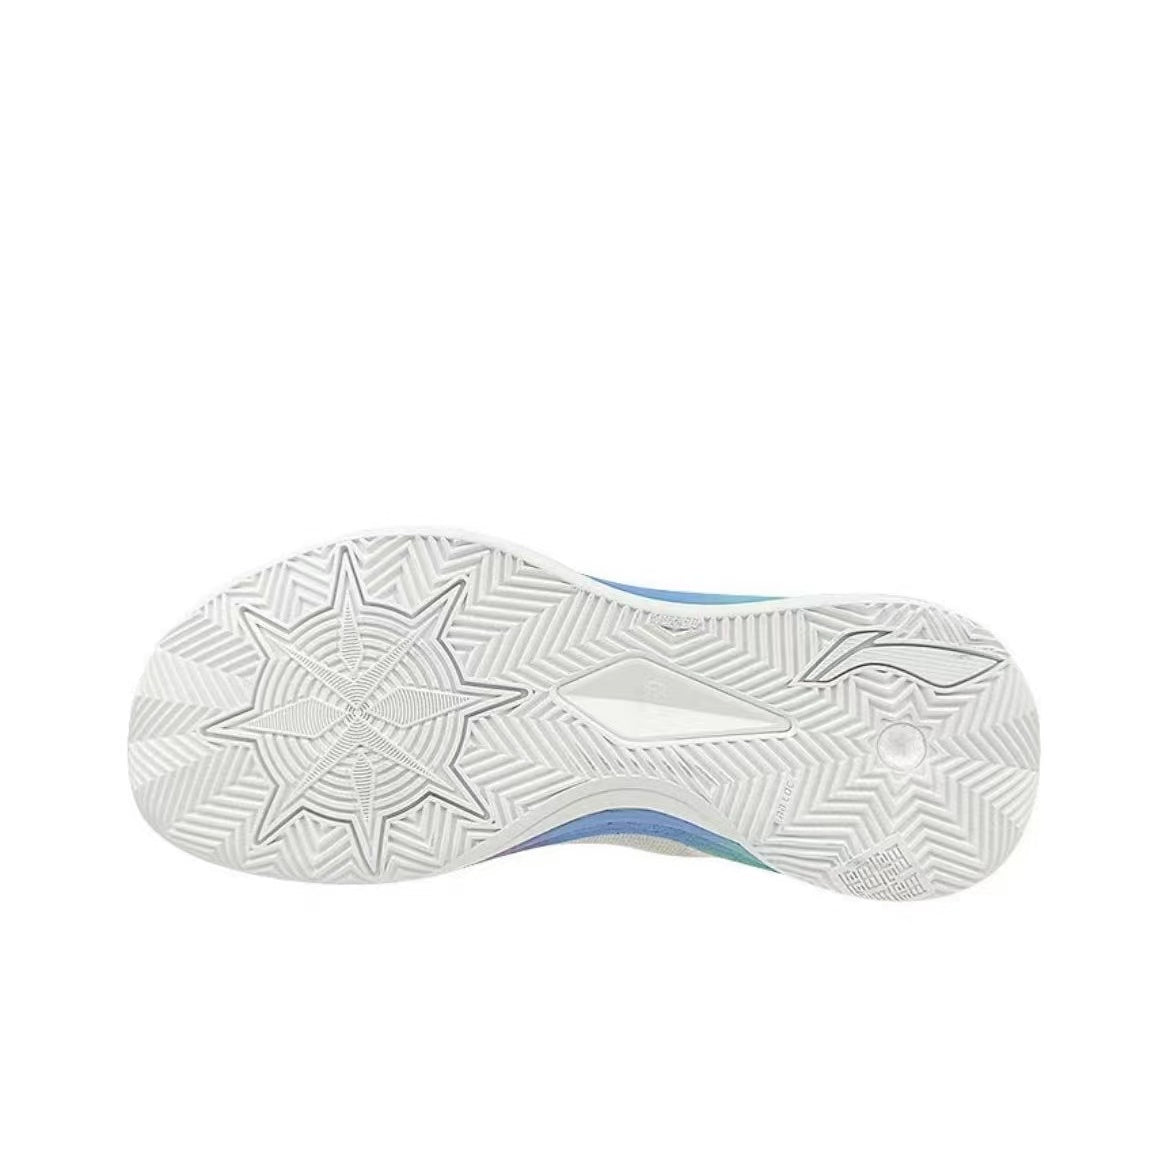 （Custom Sneakers）Li-Ning Liren 3 V2 - Cotton Candy